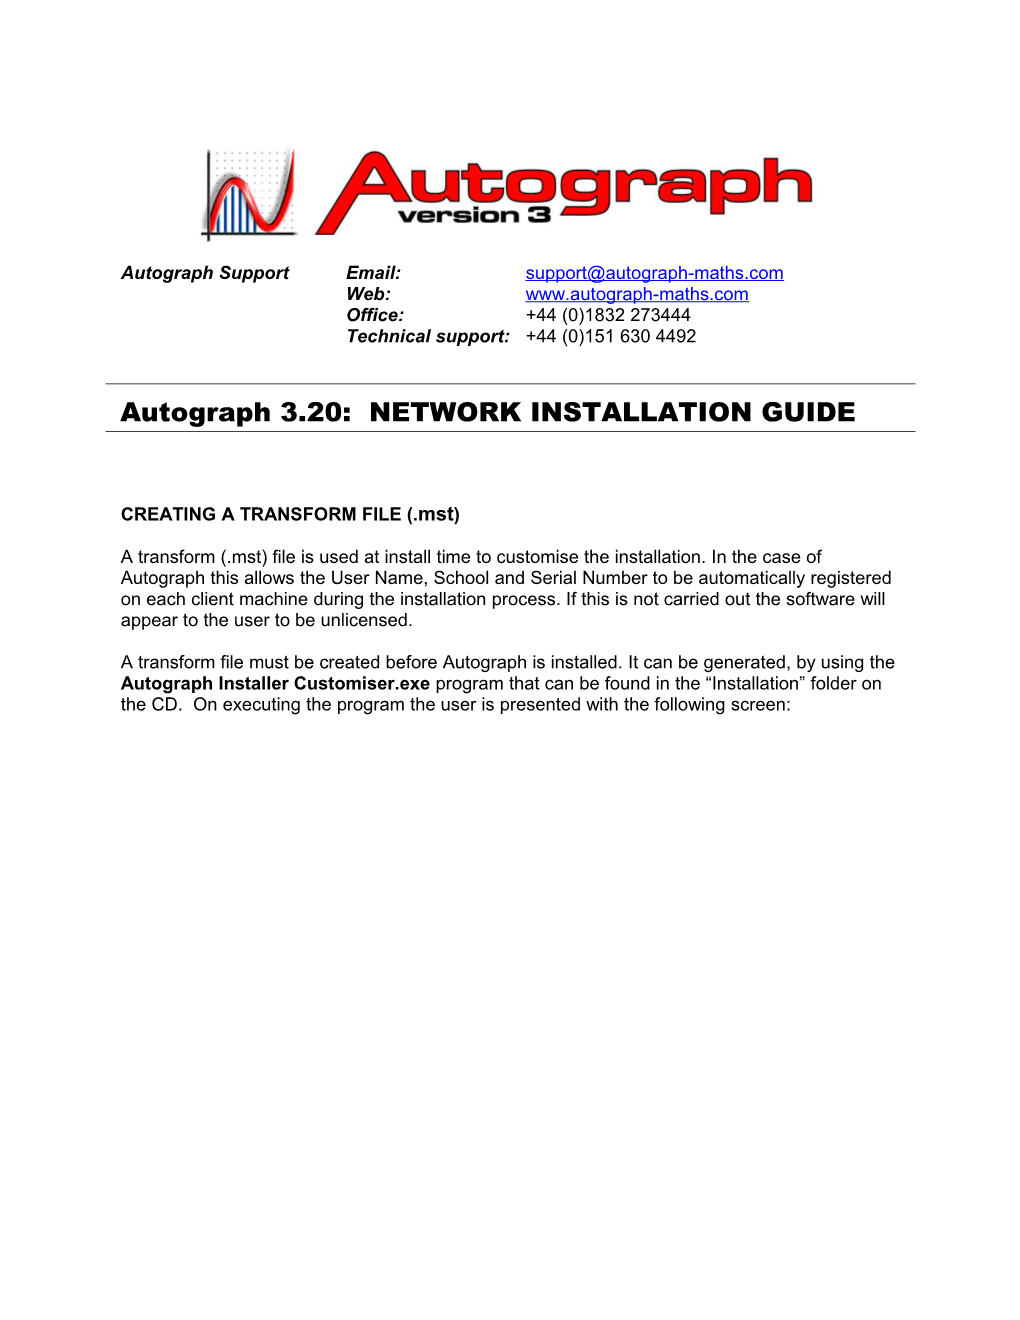 Autograph Network Installation